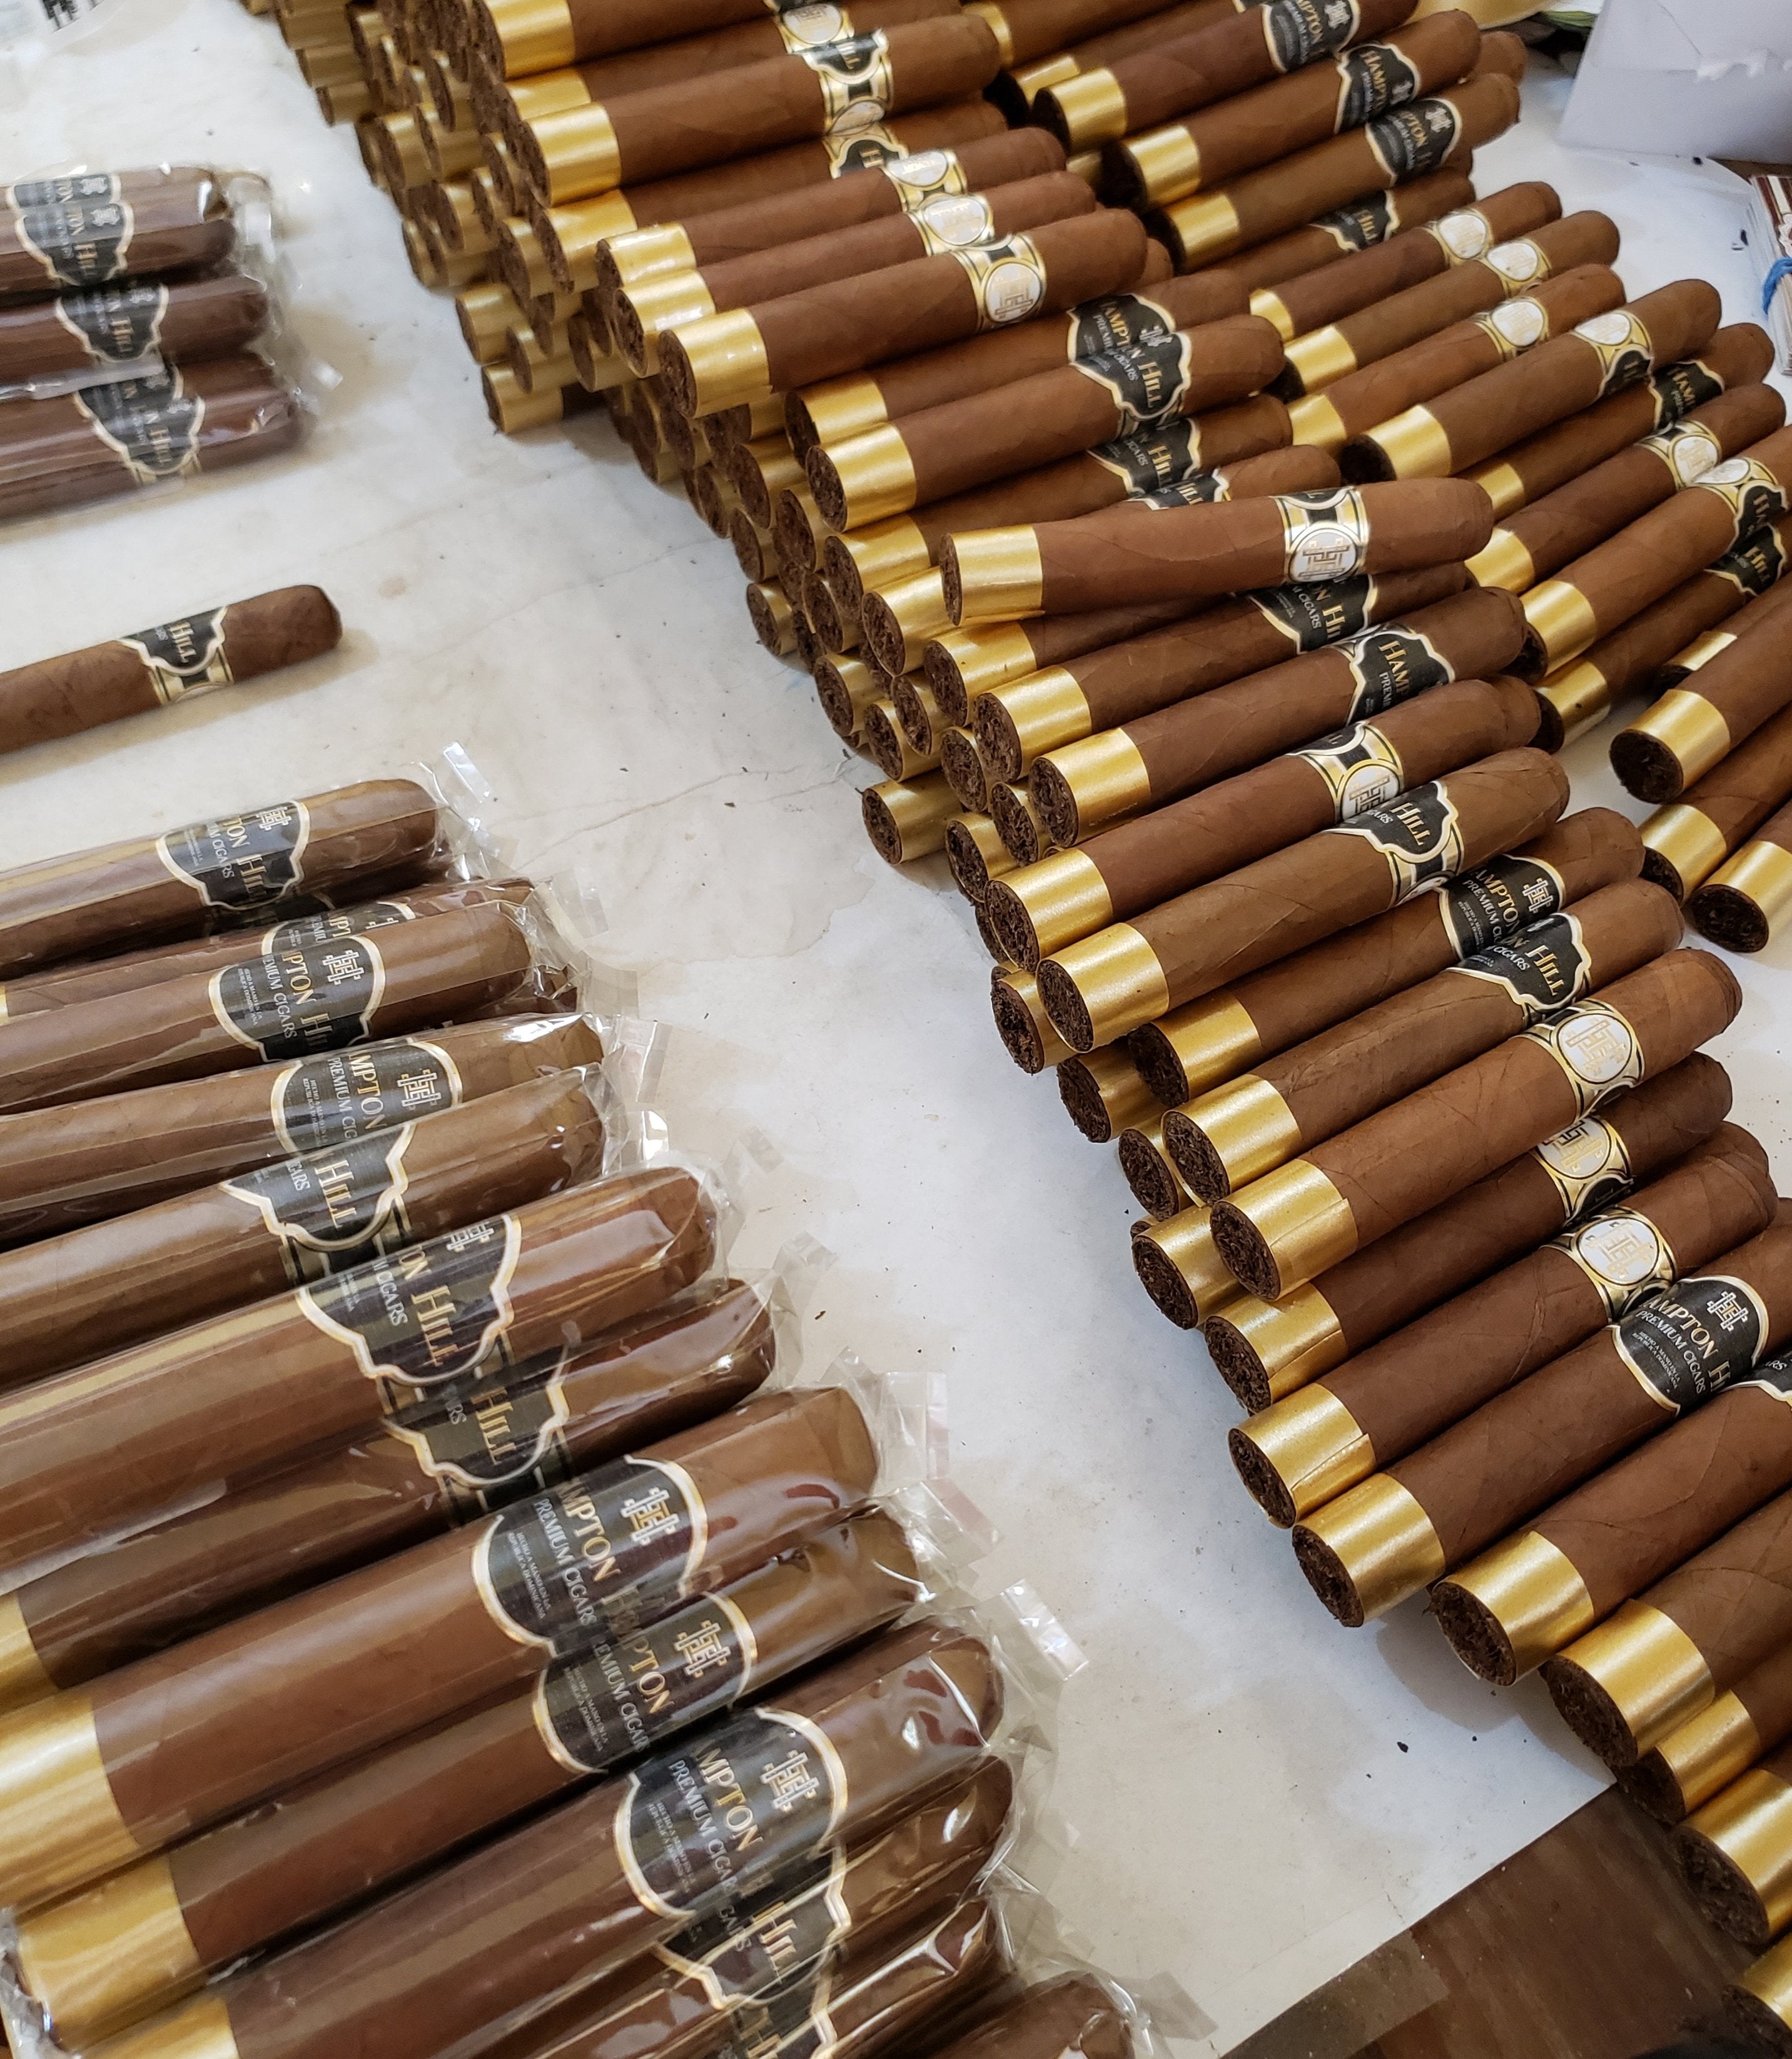 Box of 10 Hampton Hill Cigars